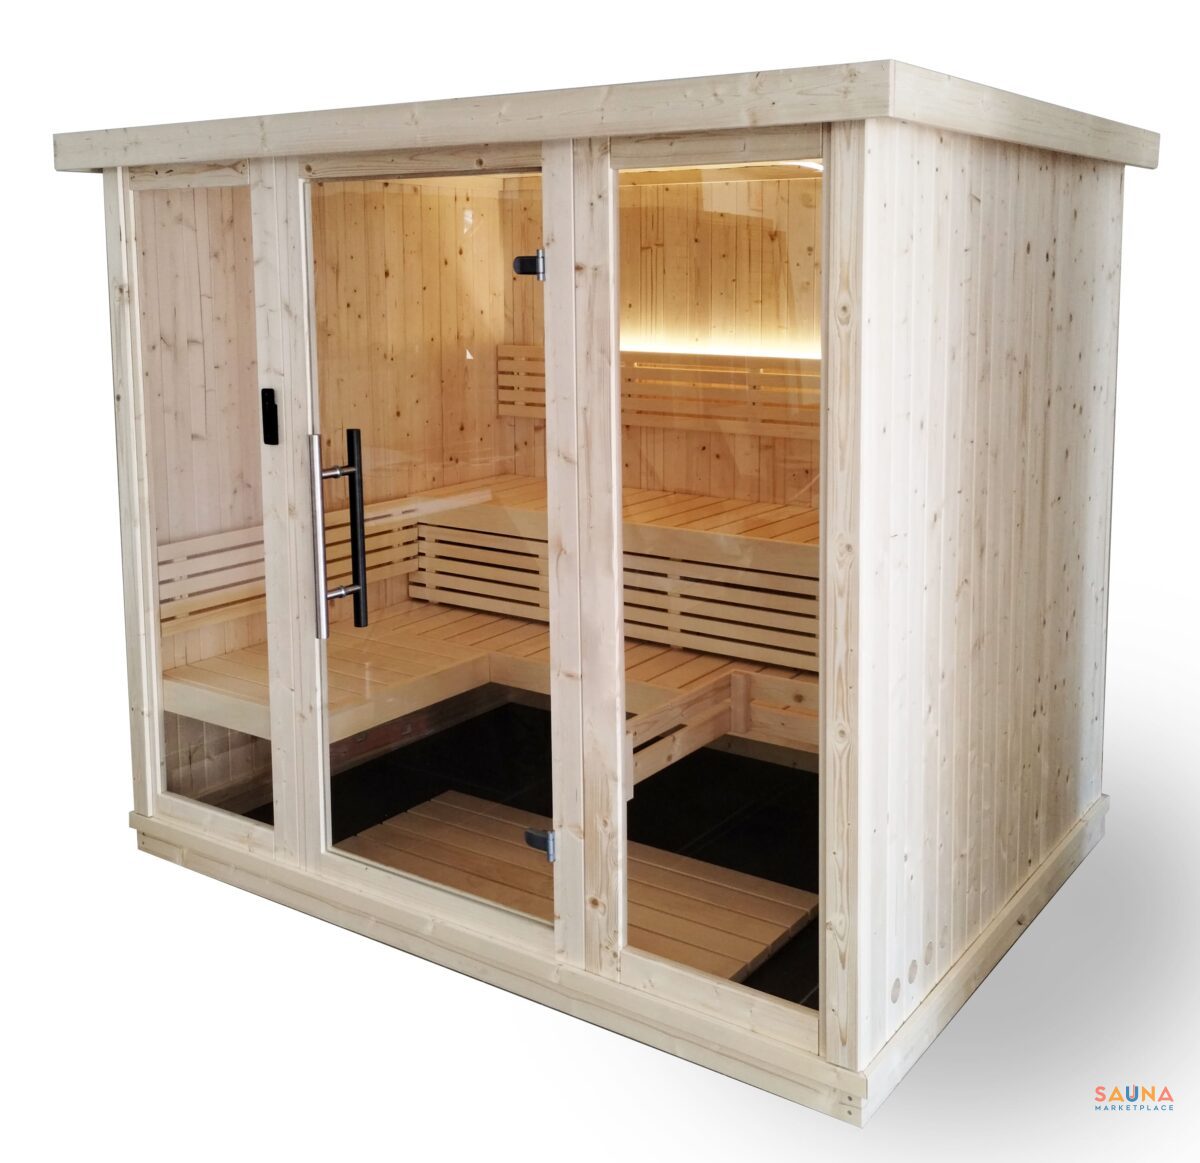 Saunalife X7 6 Person Indoor Sauna Kit